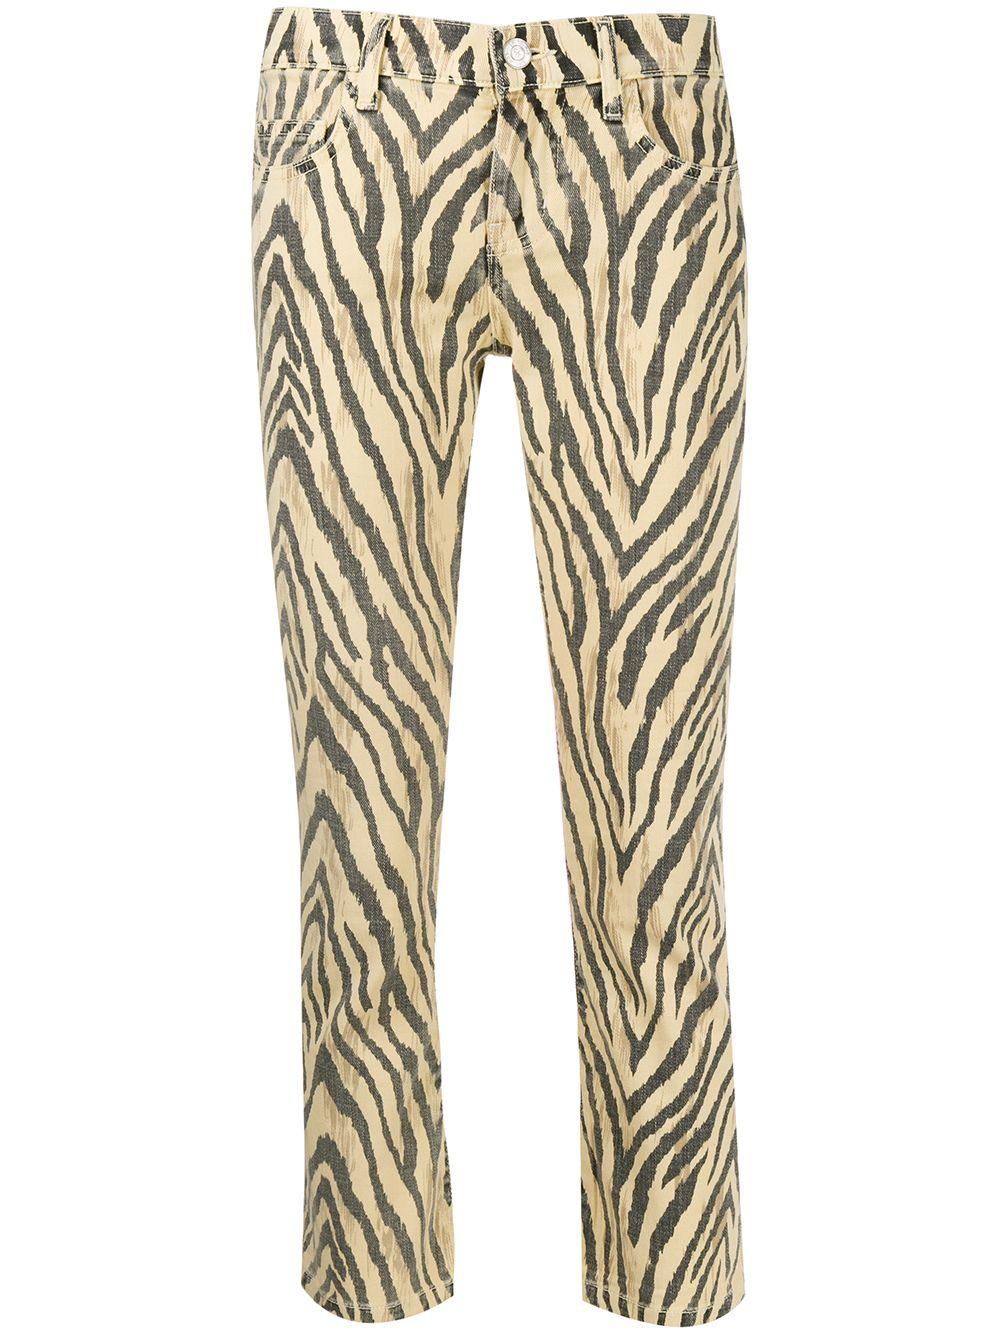 Current/Elliott Denim Zebra Print Cropped Trousers in Yellow,Zebra ...